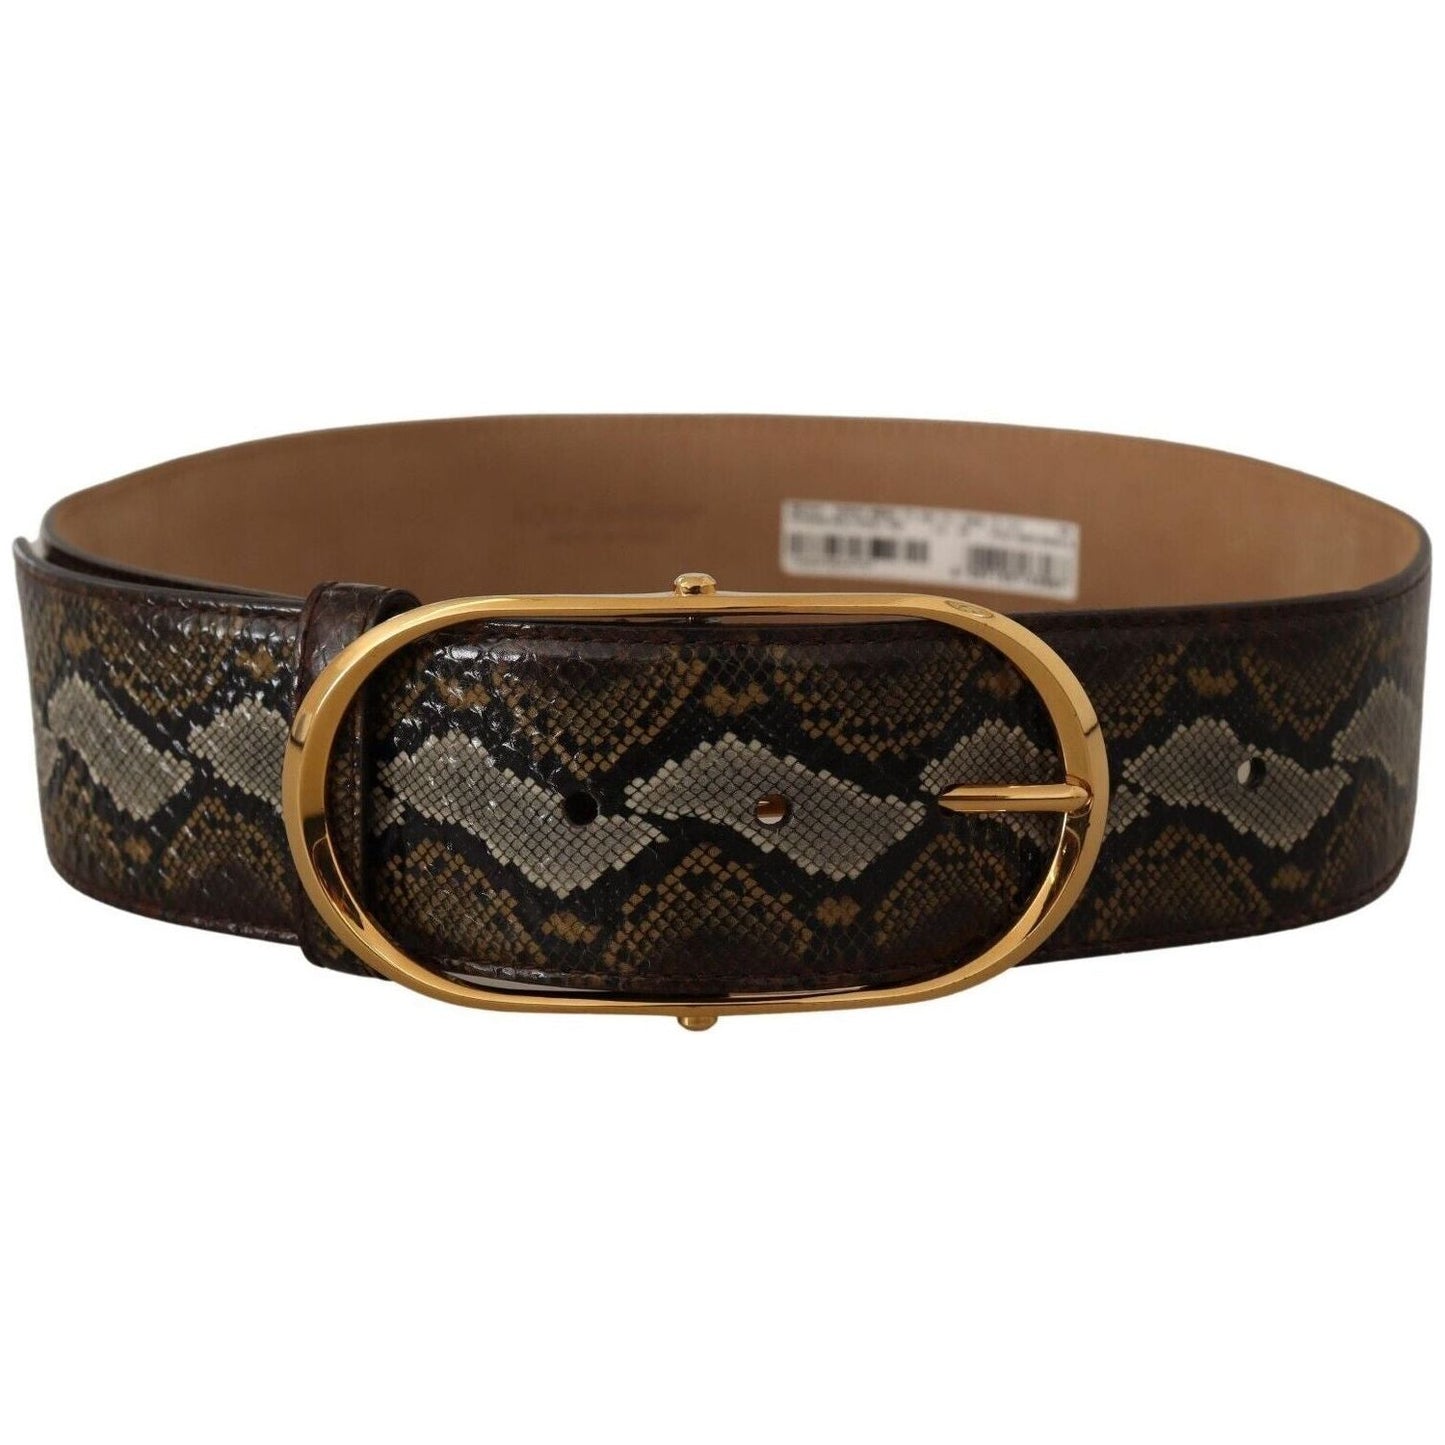 Dolce & Gabbana Elegant Gold Oval Buckle Leather Belt brown-python-leather-gold-oval-buckle-belt WOMAN BELTS s-l1600-281-d32e9d7f-4f4.jpg